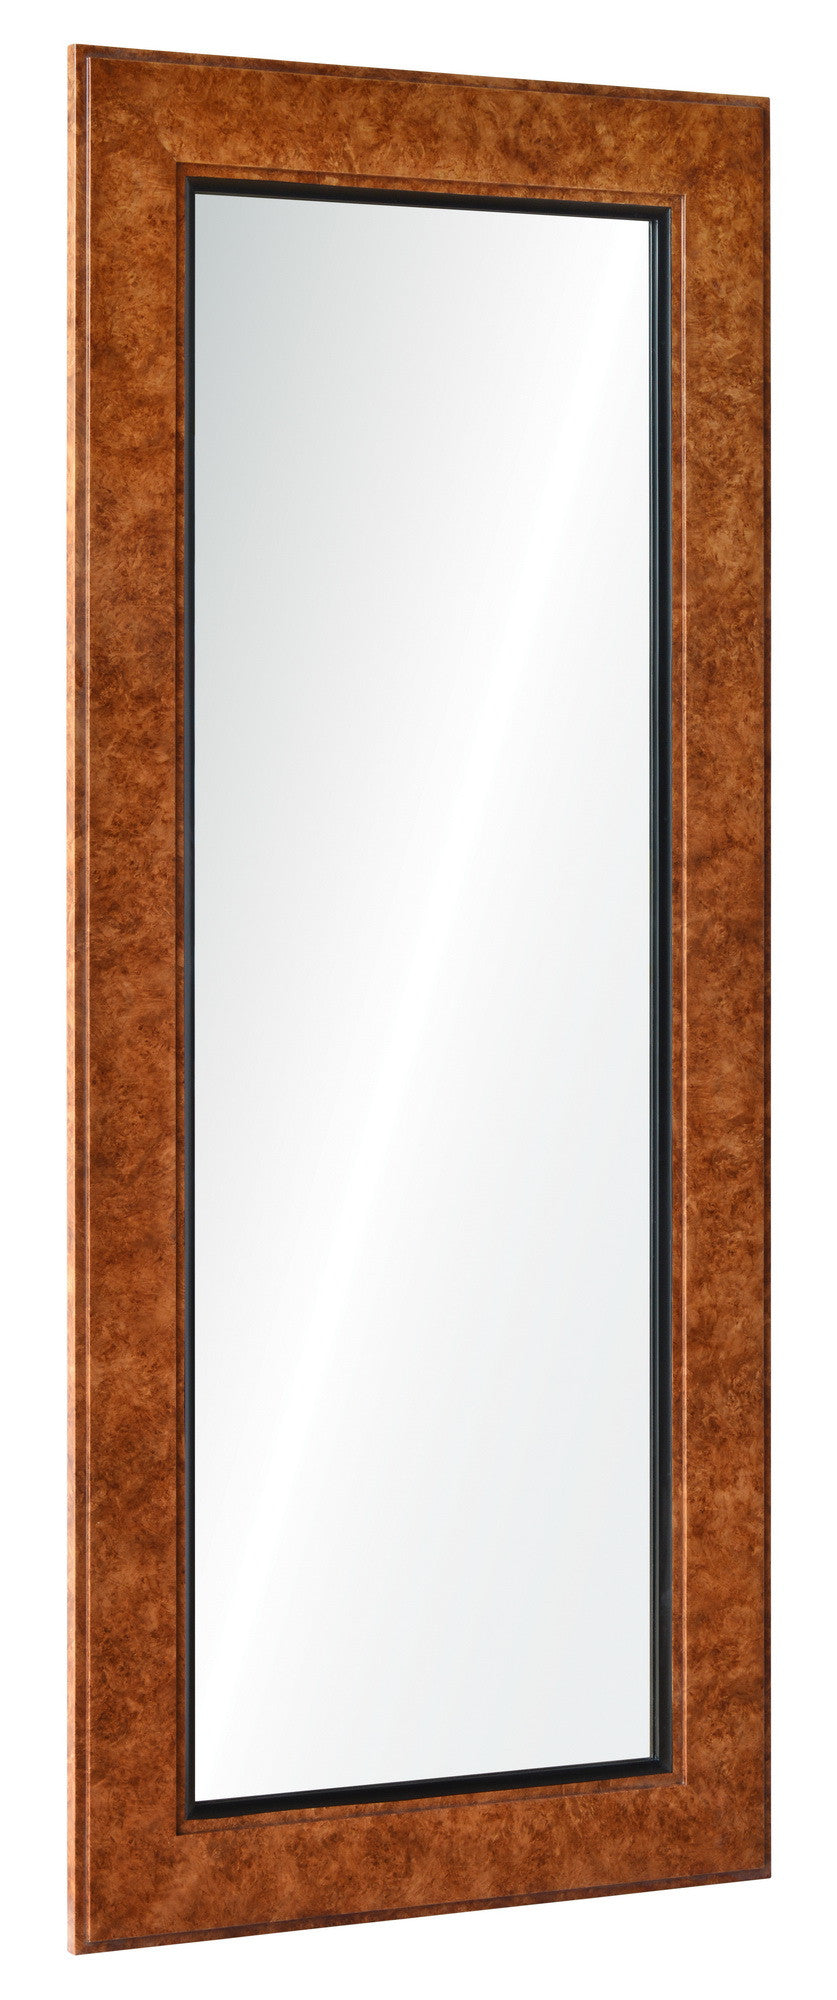 Full length mirror in burlwood and matte black